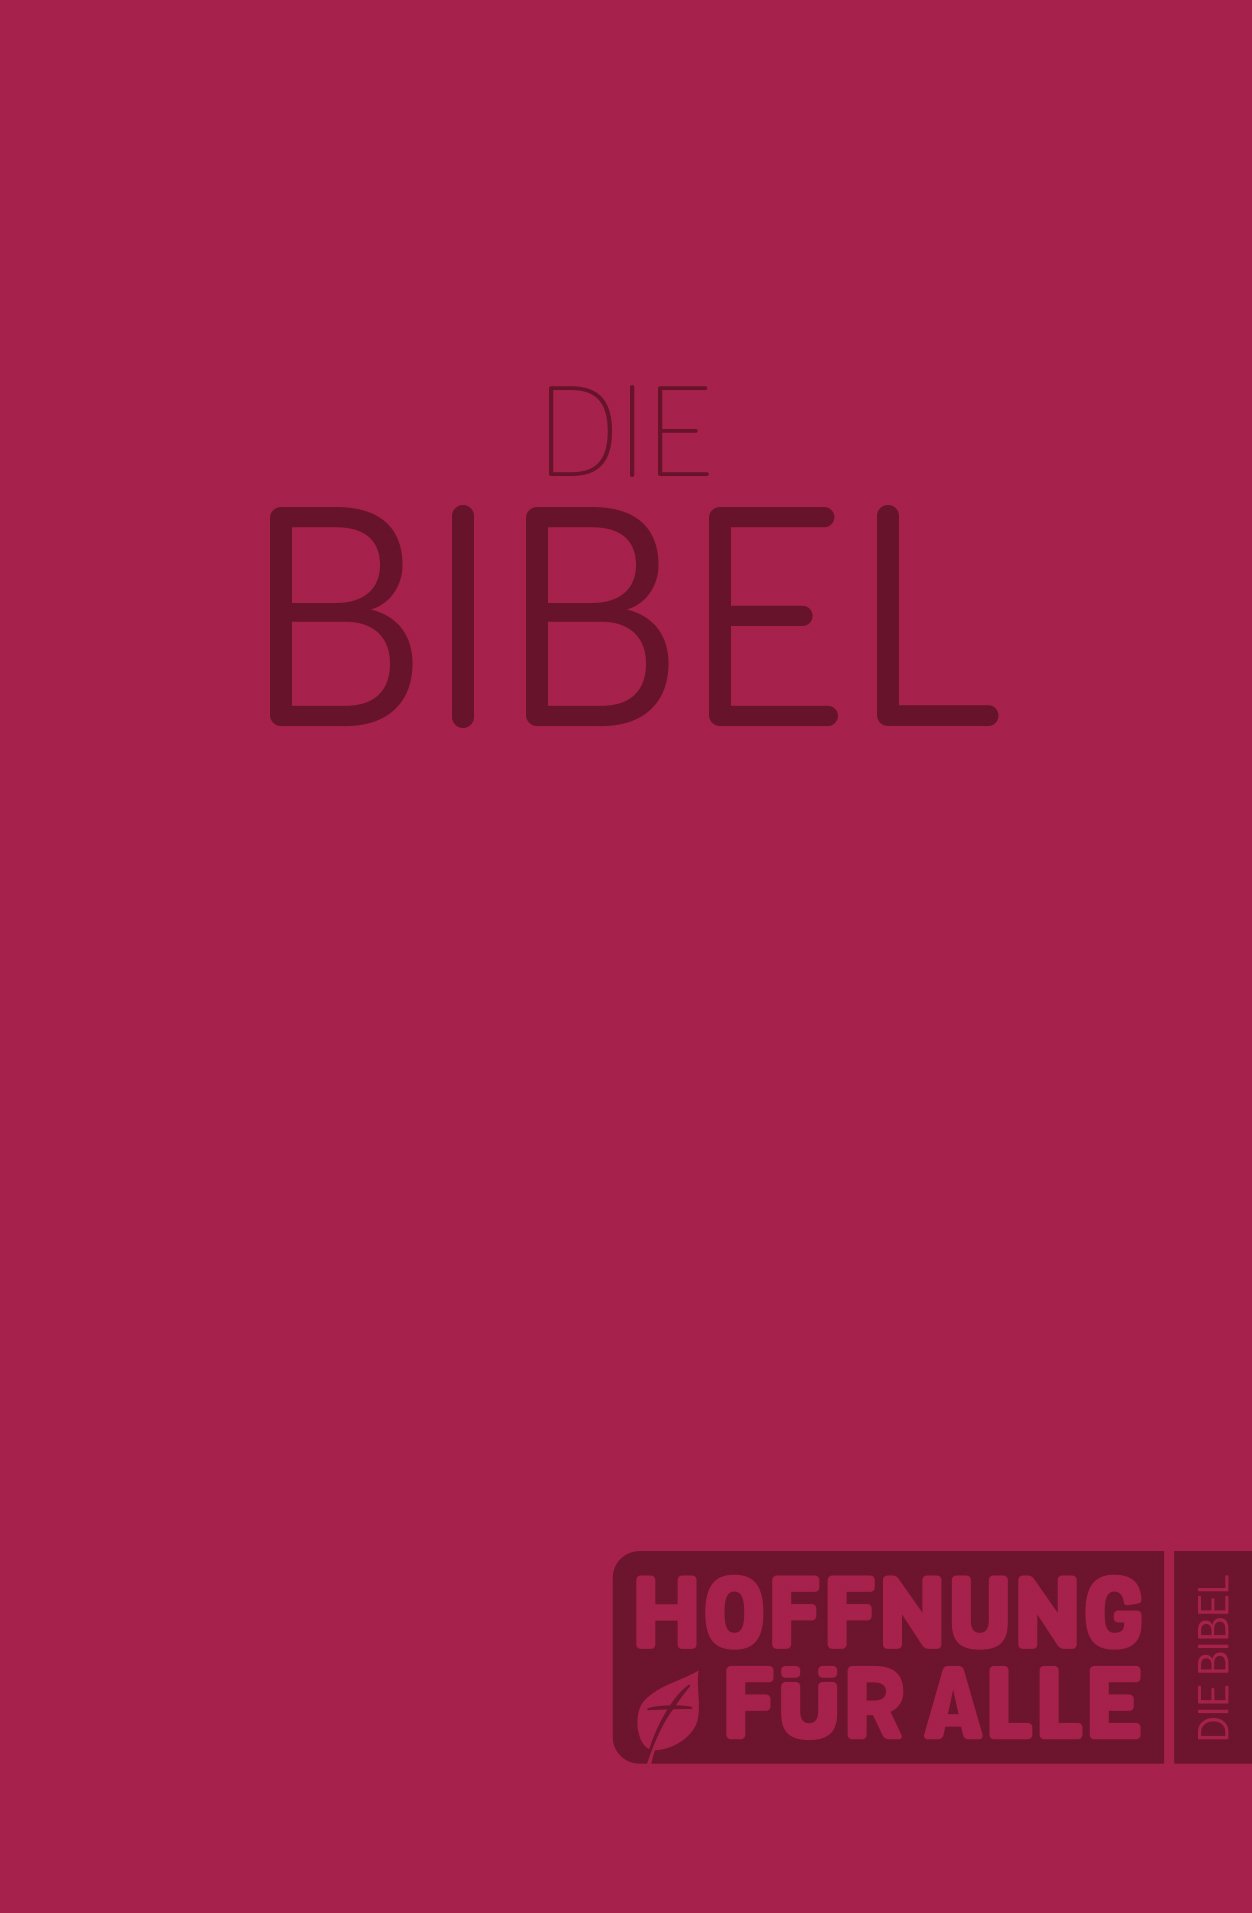 Hoffnung für alle. Die Bibel - Softcover-Edition rot - Cover